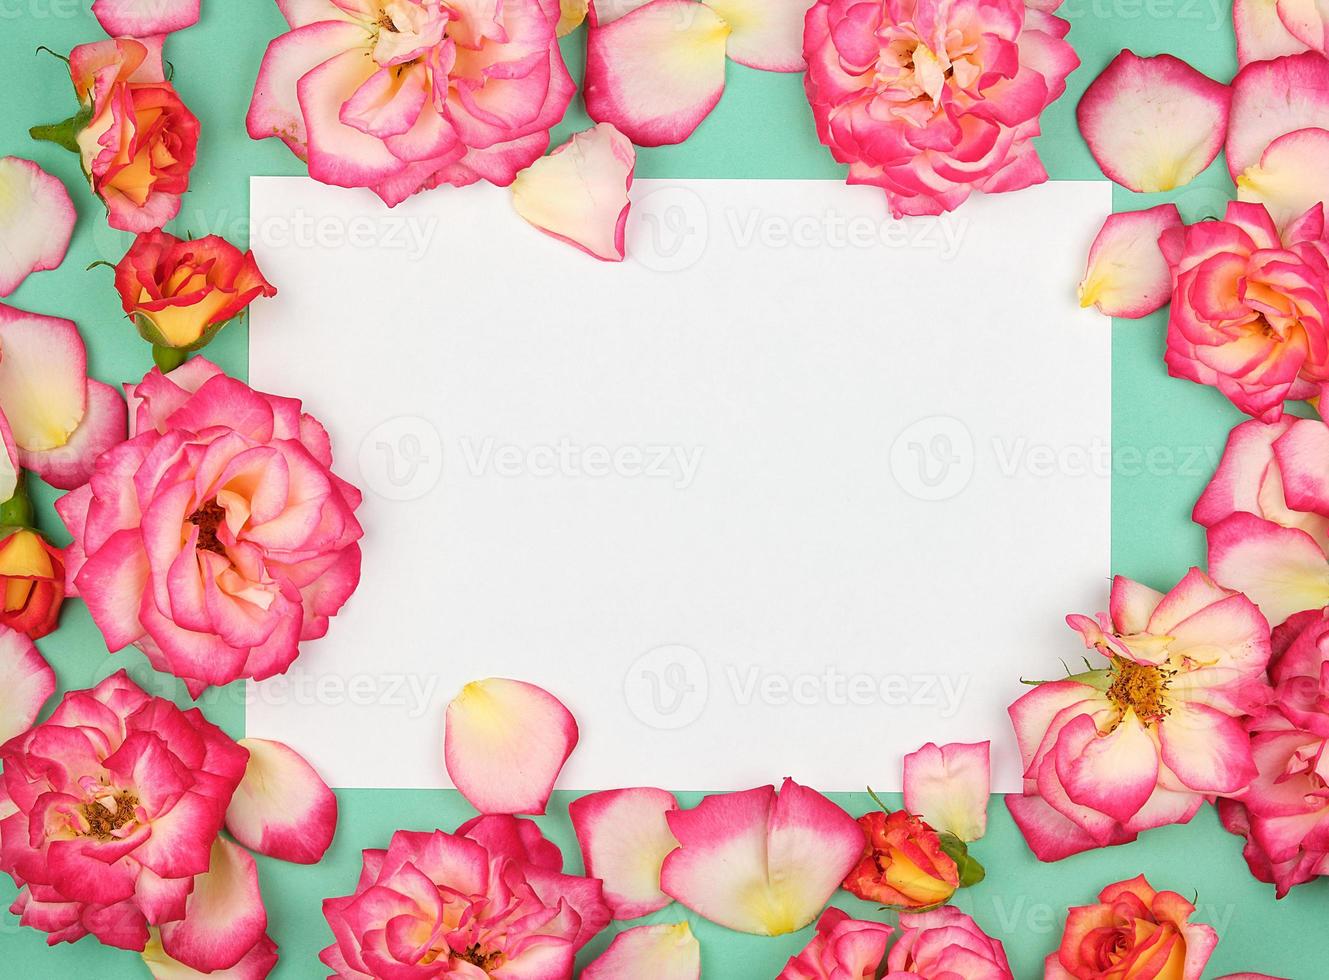 folha de papel branco e botões de rosas cor de rosa foto